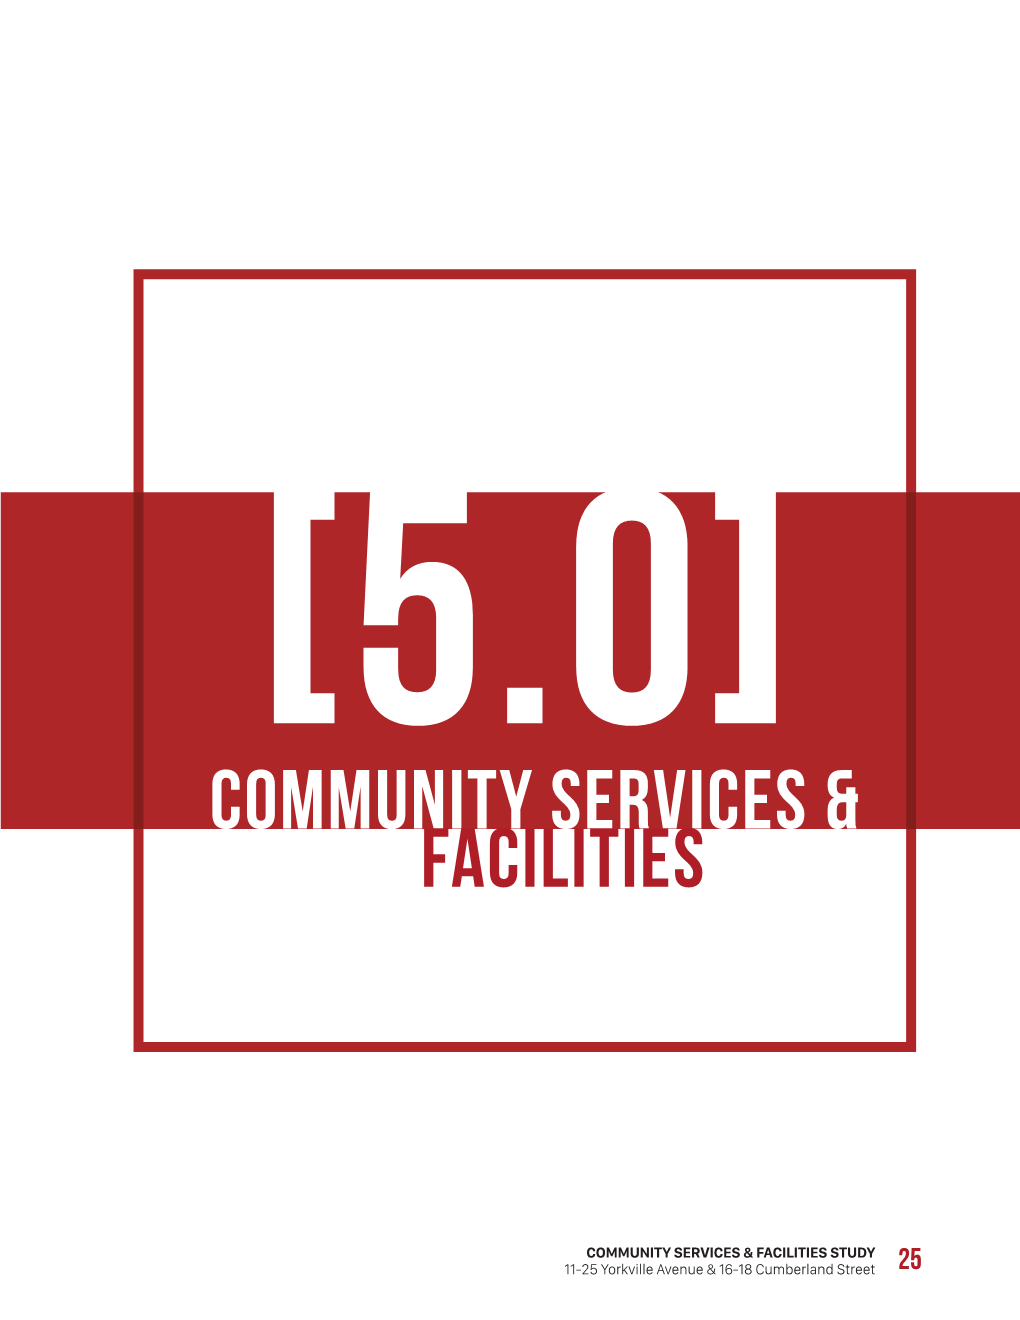 Community Services & Facilities